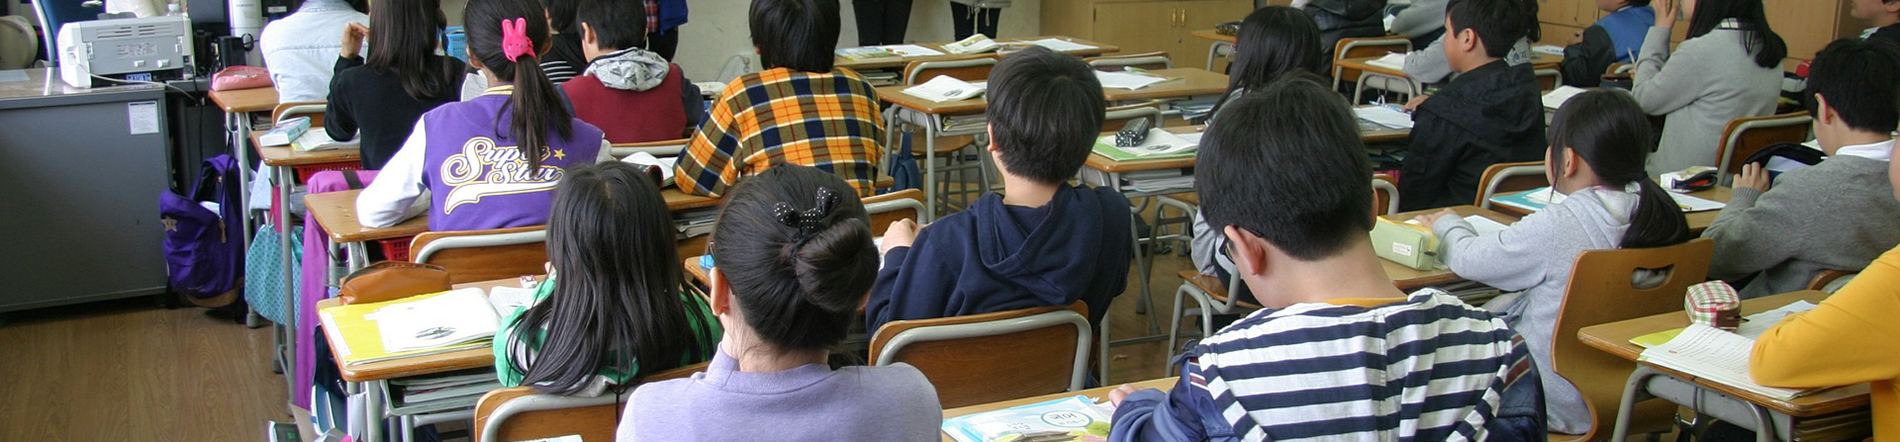 Elementary students in school